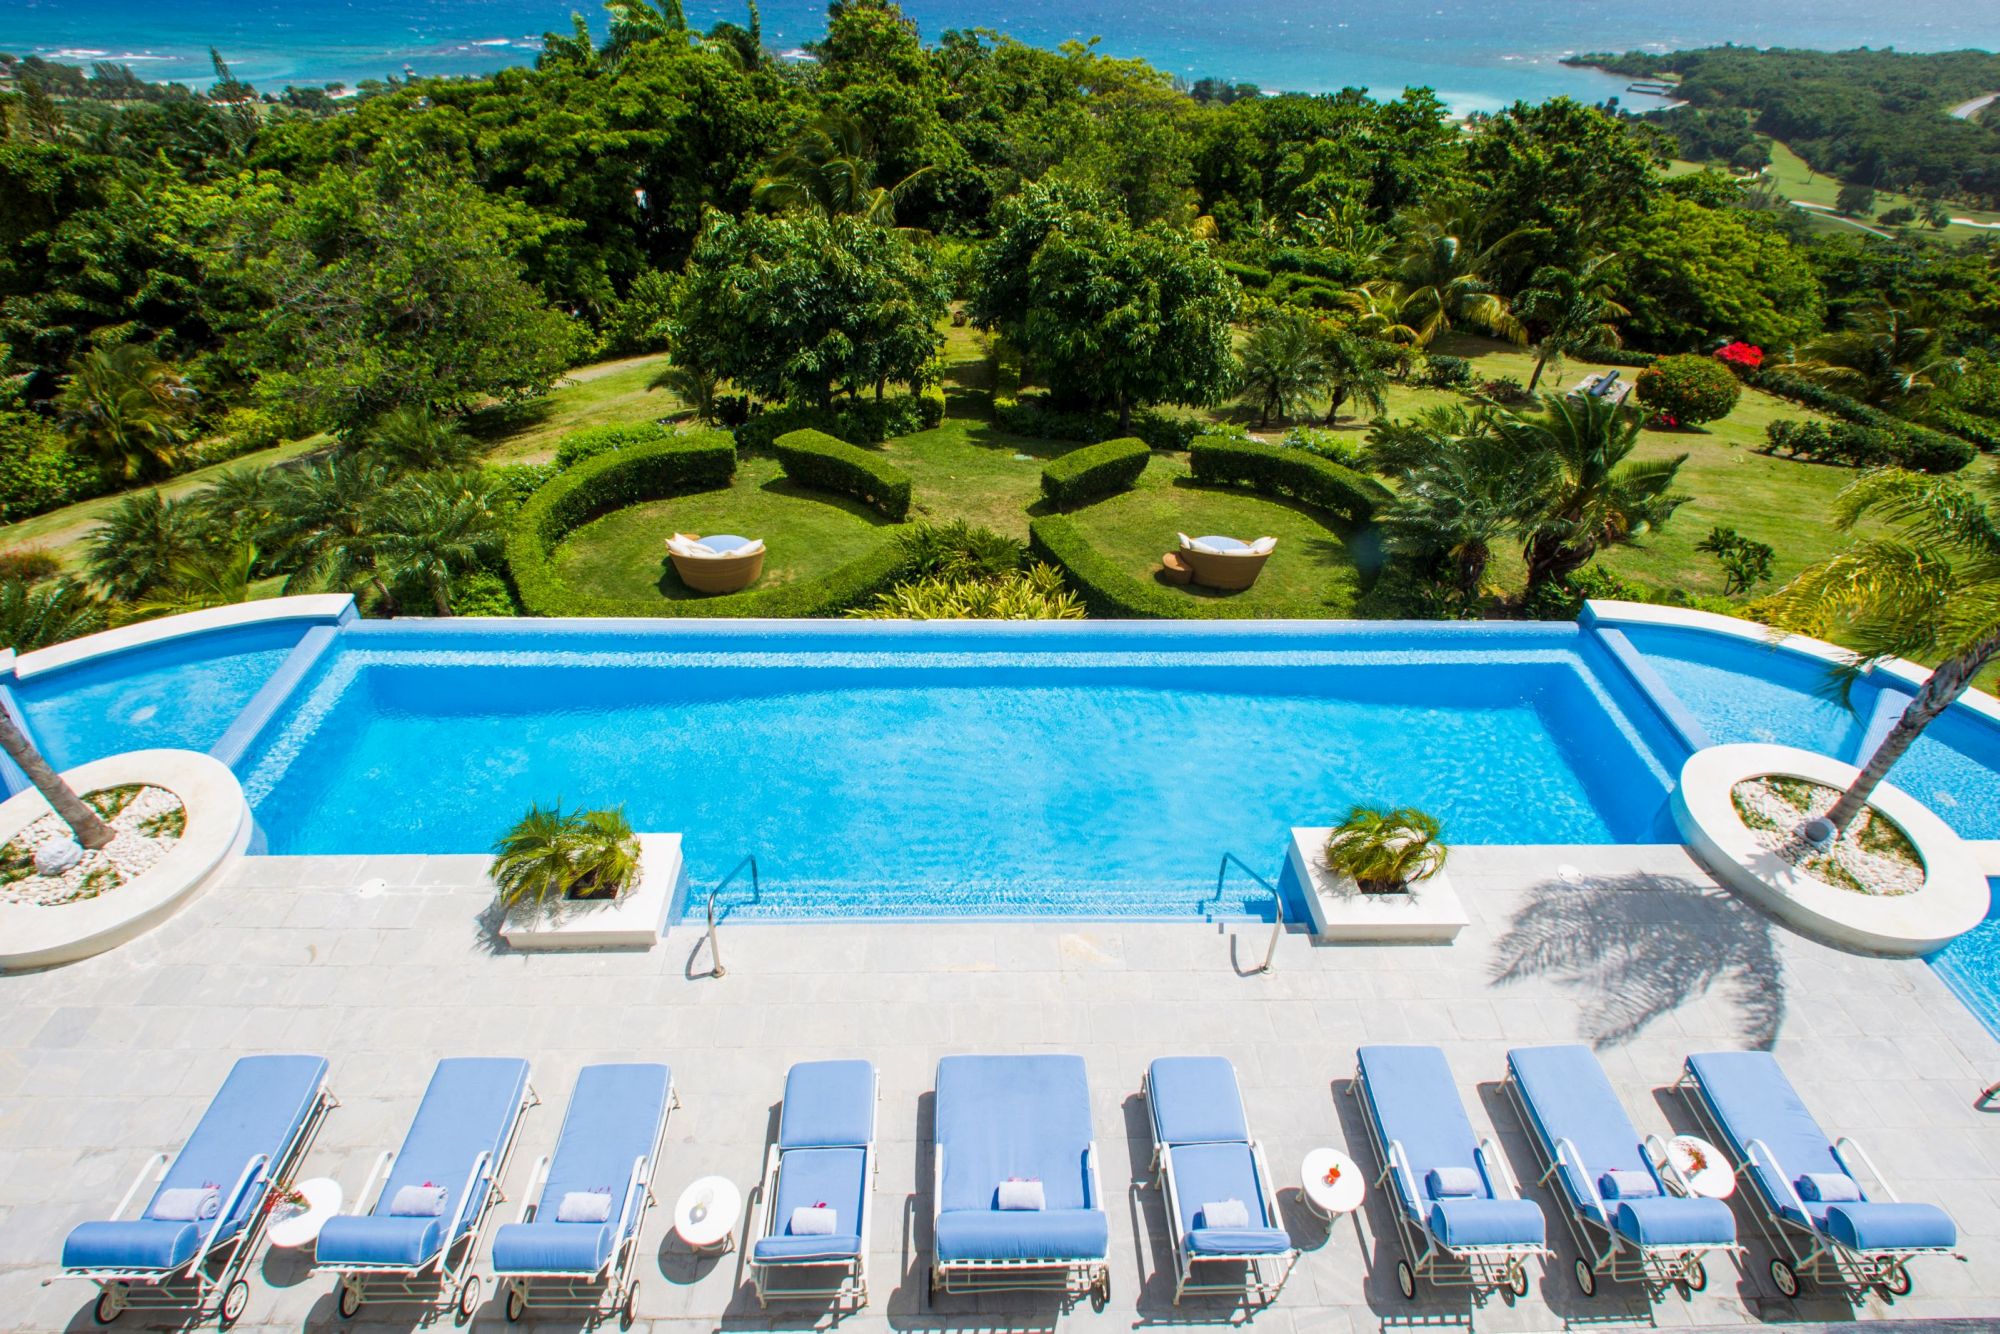 Swimming pool of Twin Palms, Jamaica